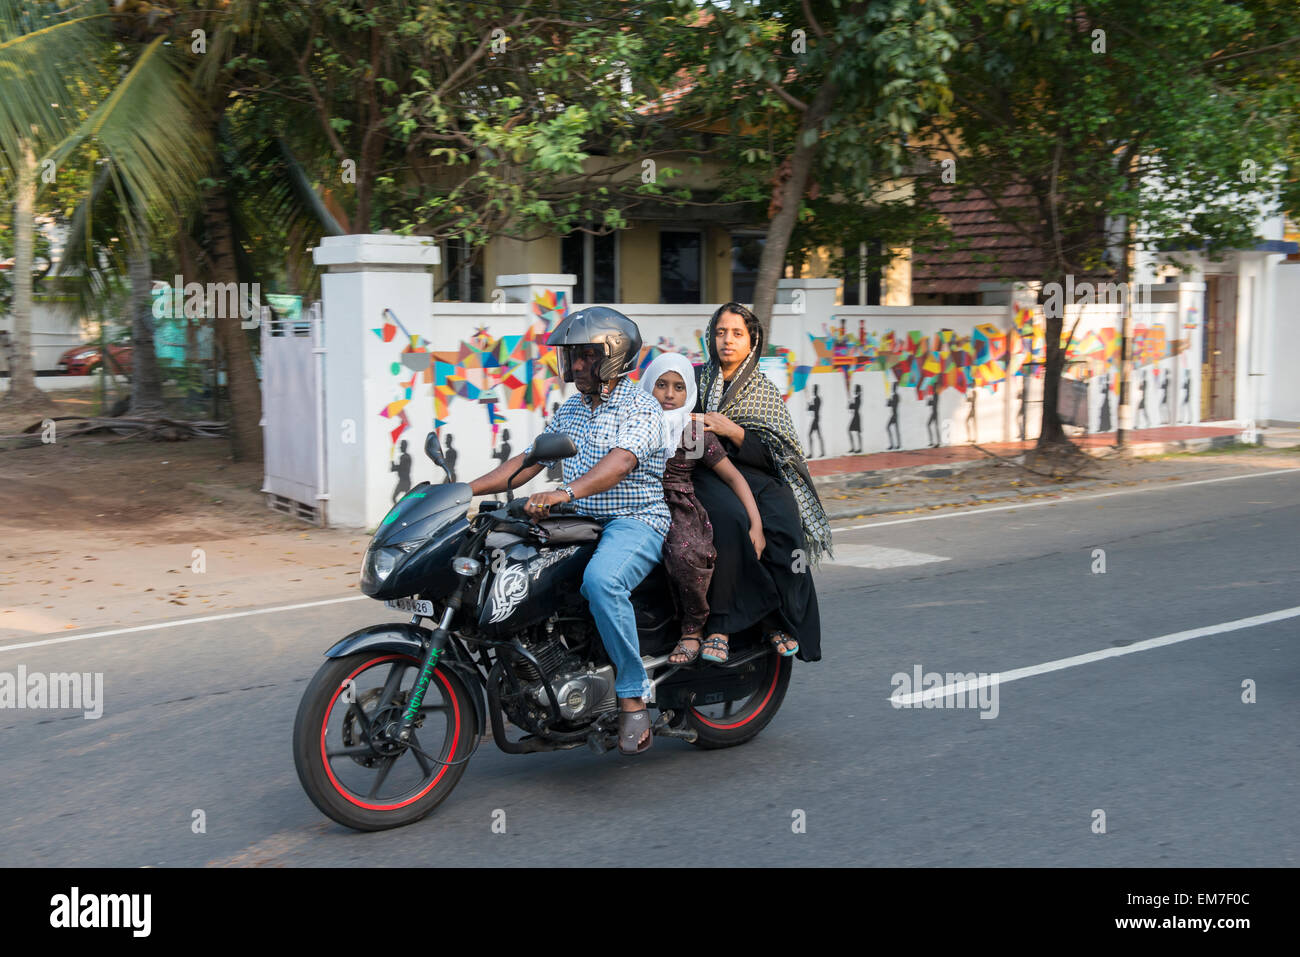 A young family riding a motorcyle through Fort Kochi, Kerala India Stock Photo